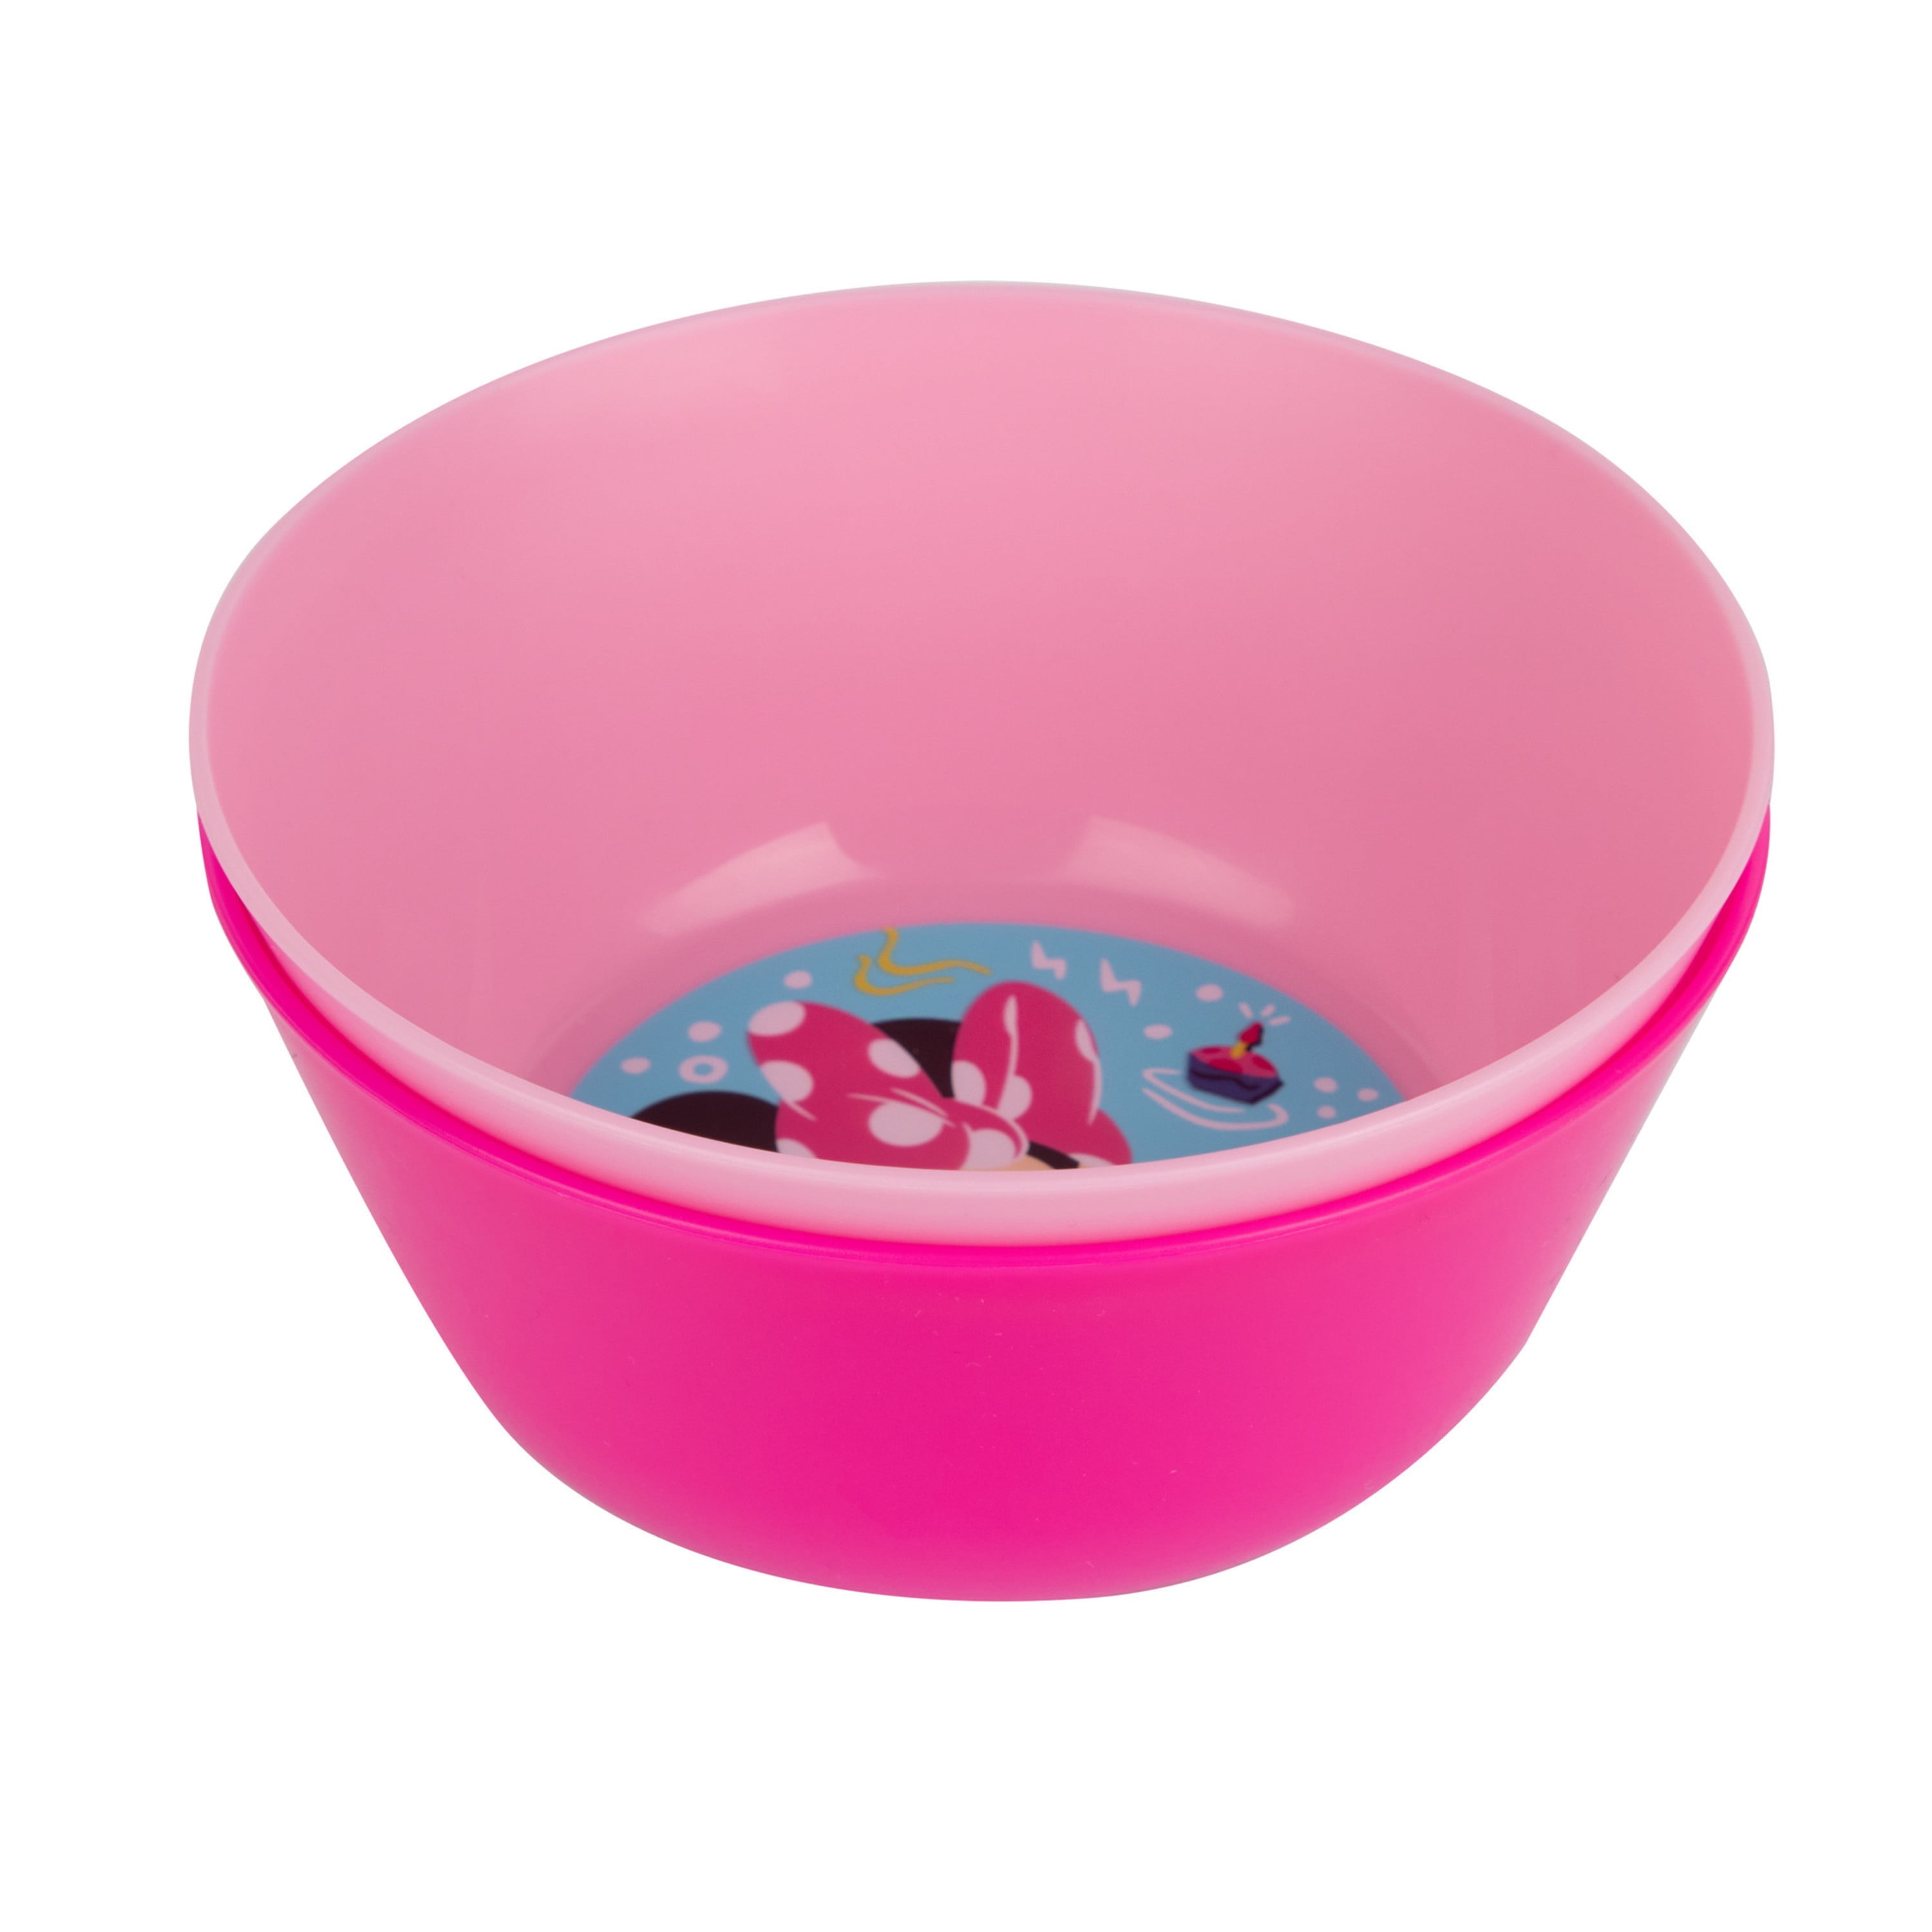 Disney Minnie Mouse Bowl 2 Pack - Dishwasher & Microwave Safe Bowl for Toddler Mealtimes